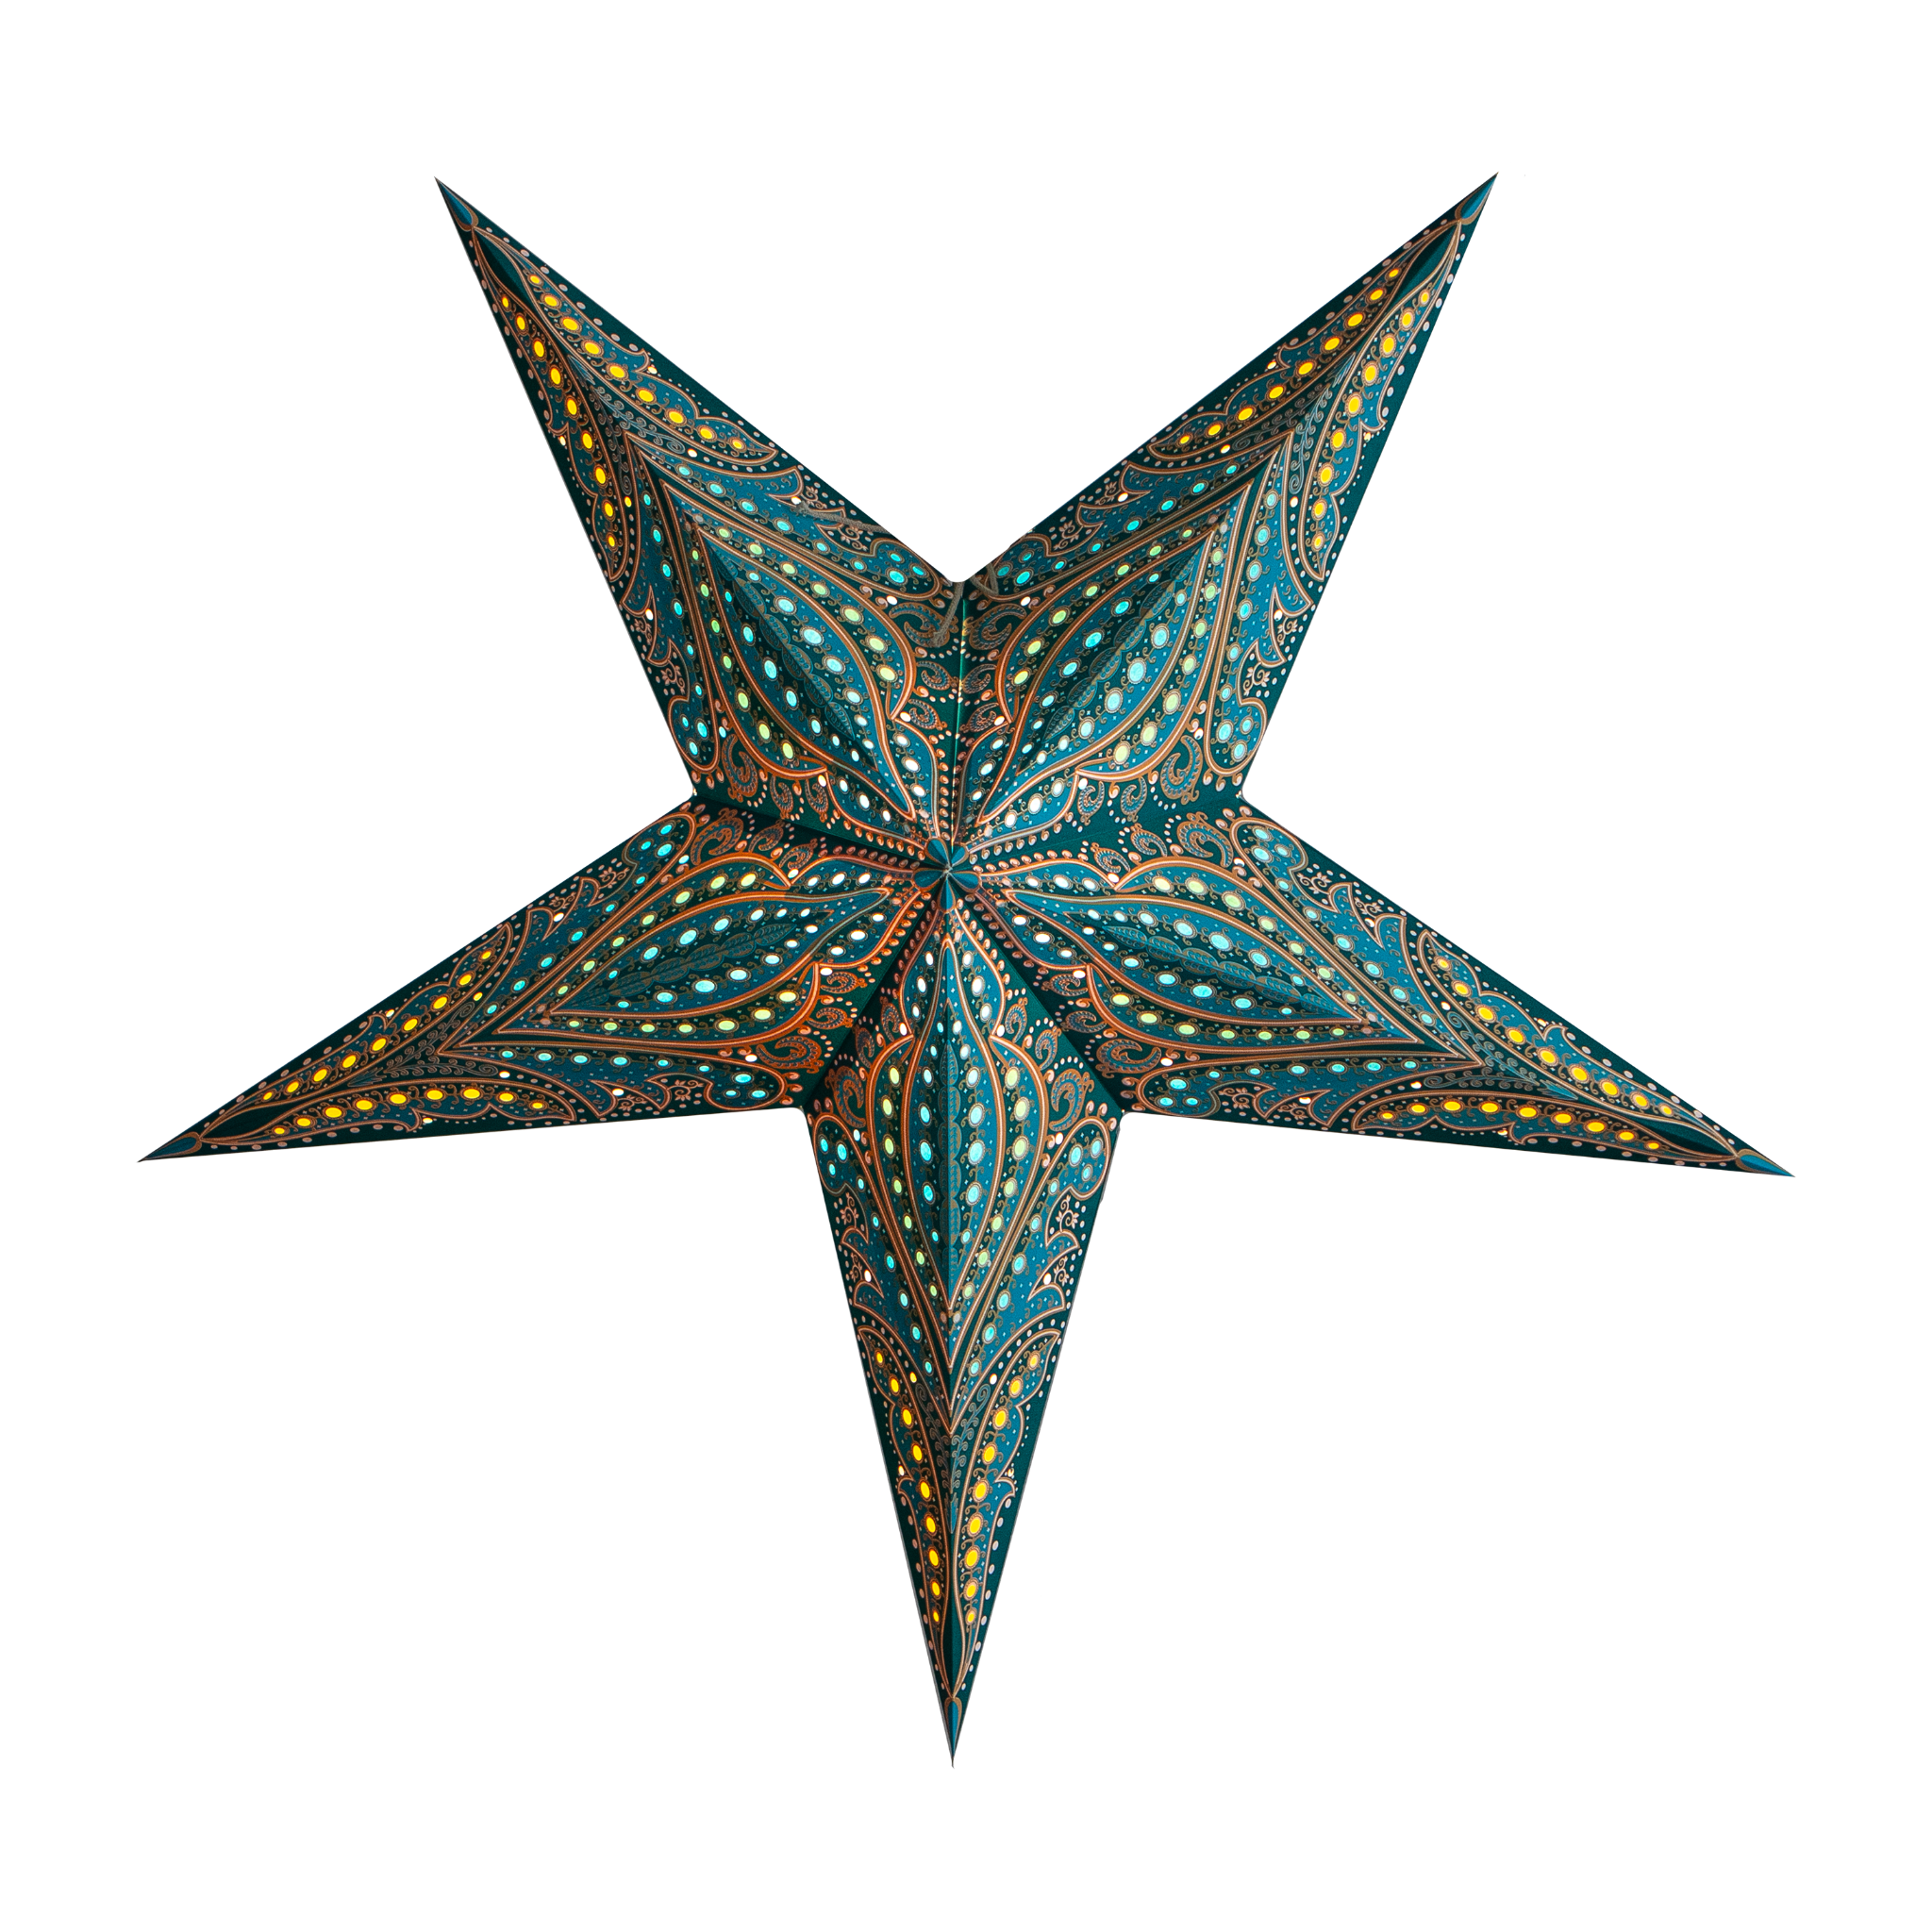 blue patterned star lantern